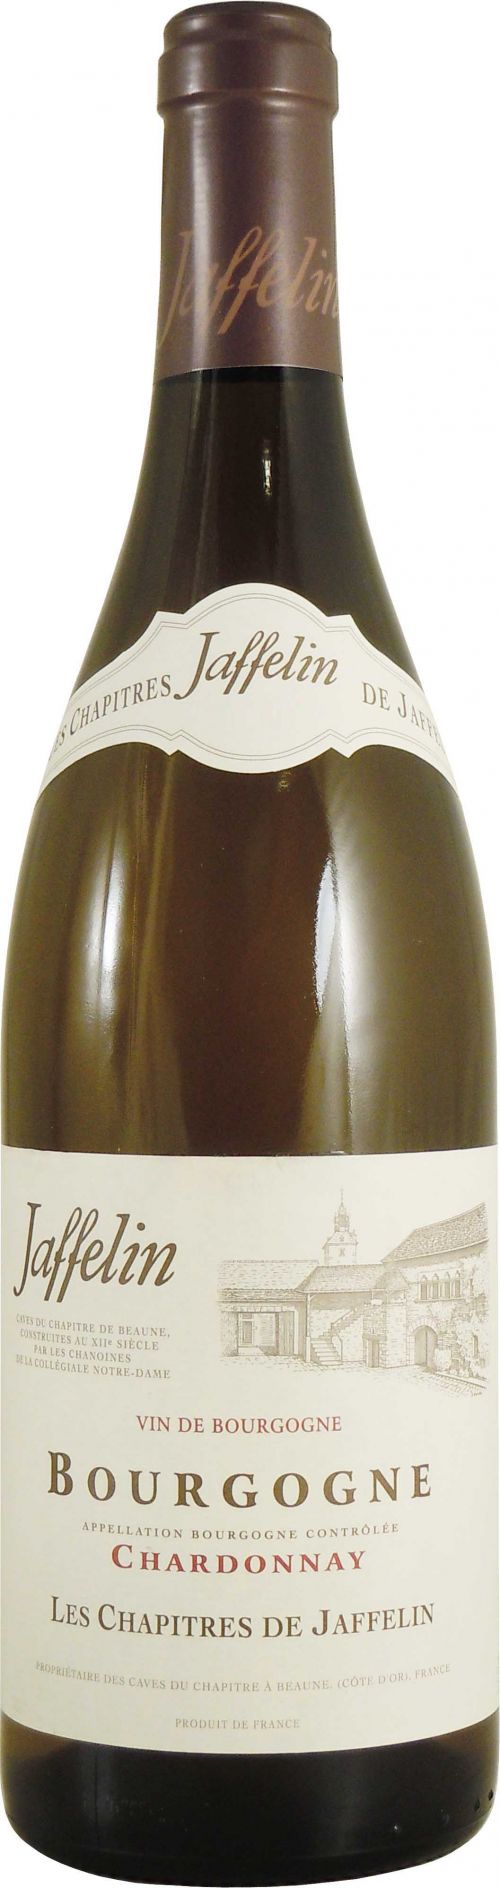 Bourgogne Chardonnay, Les Chapitres de Jaffelin, AOC Bourgogne